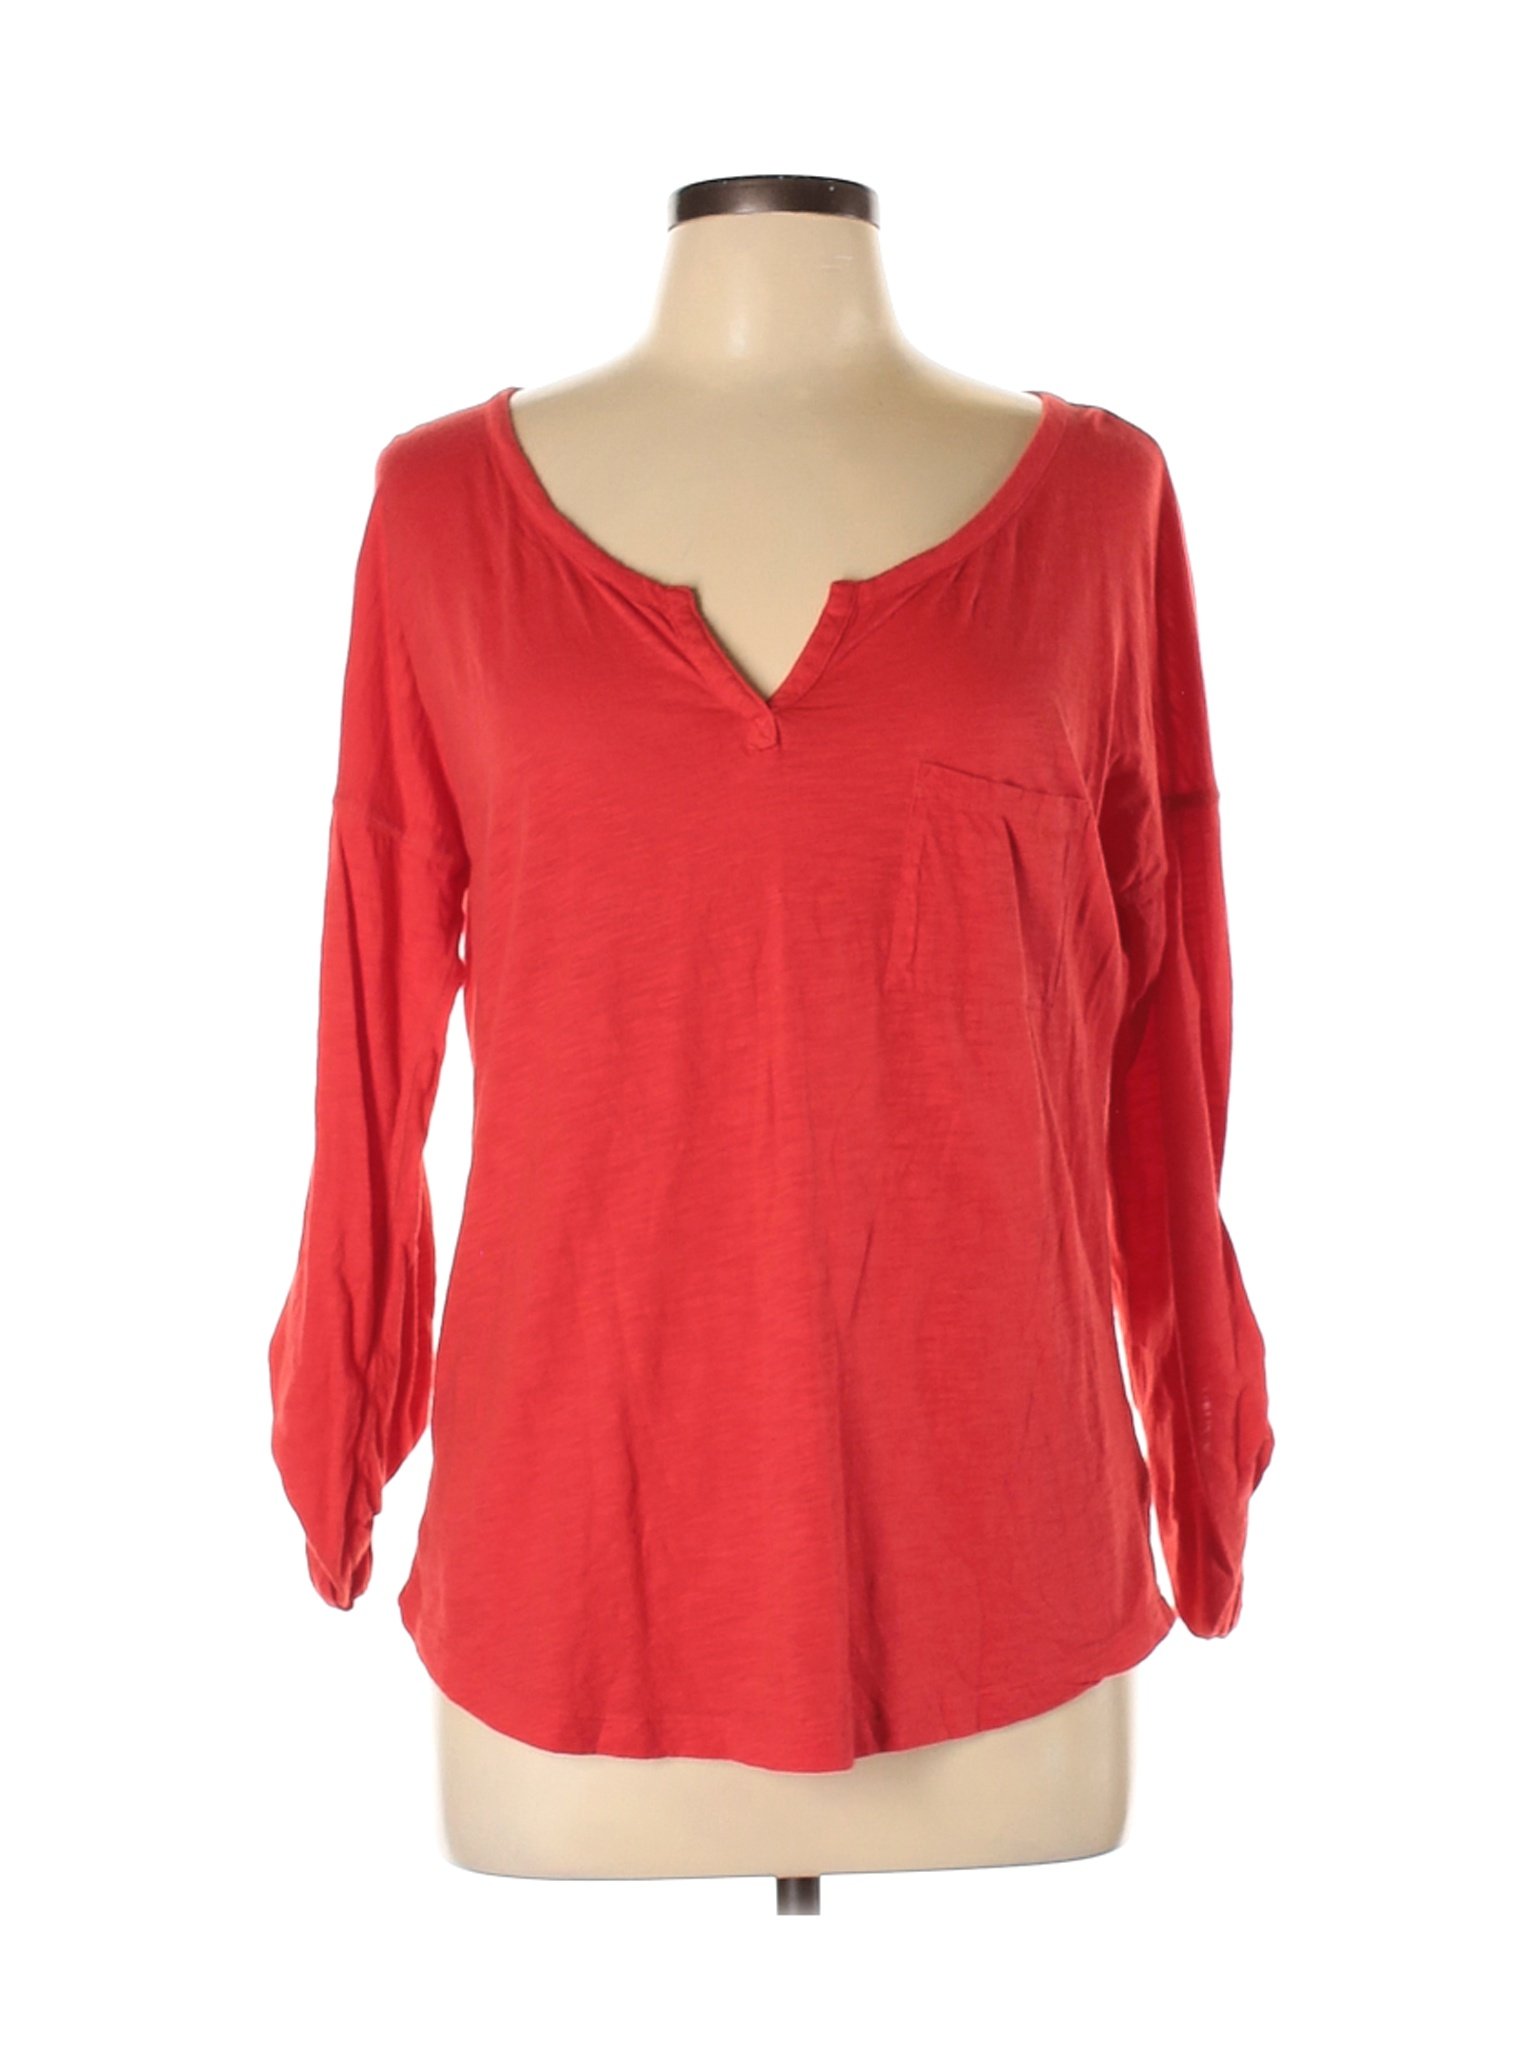 Express Women Red Long Sleeve Top L | eBay